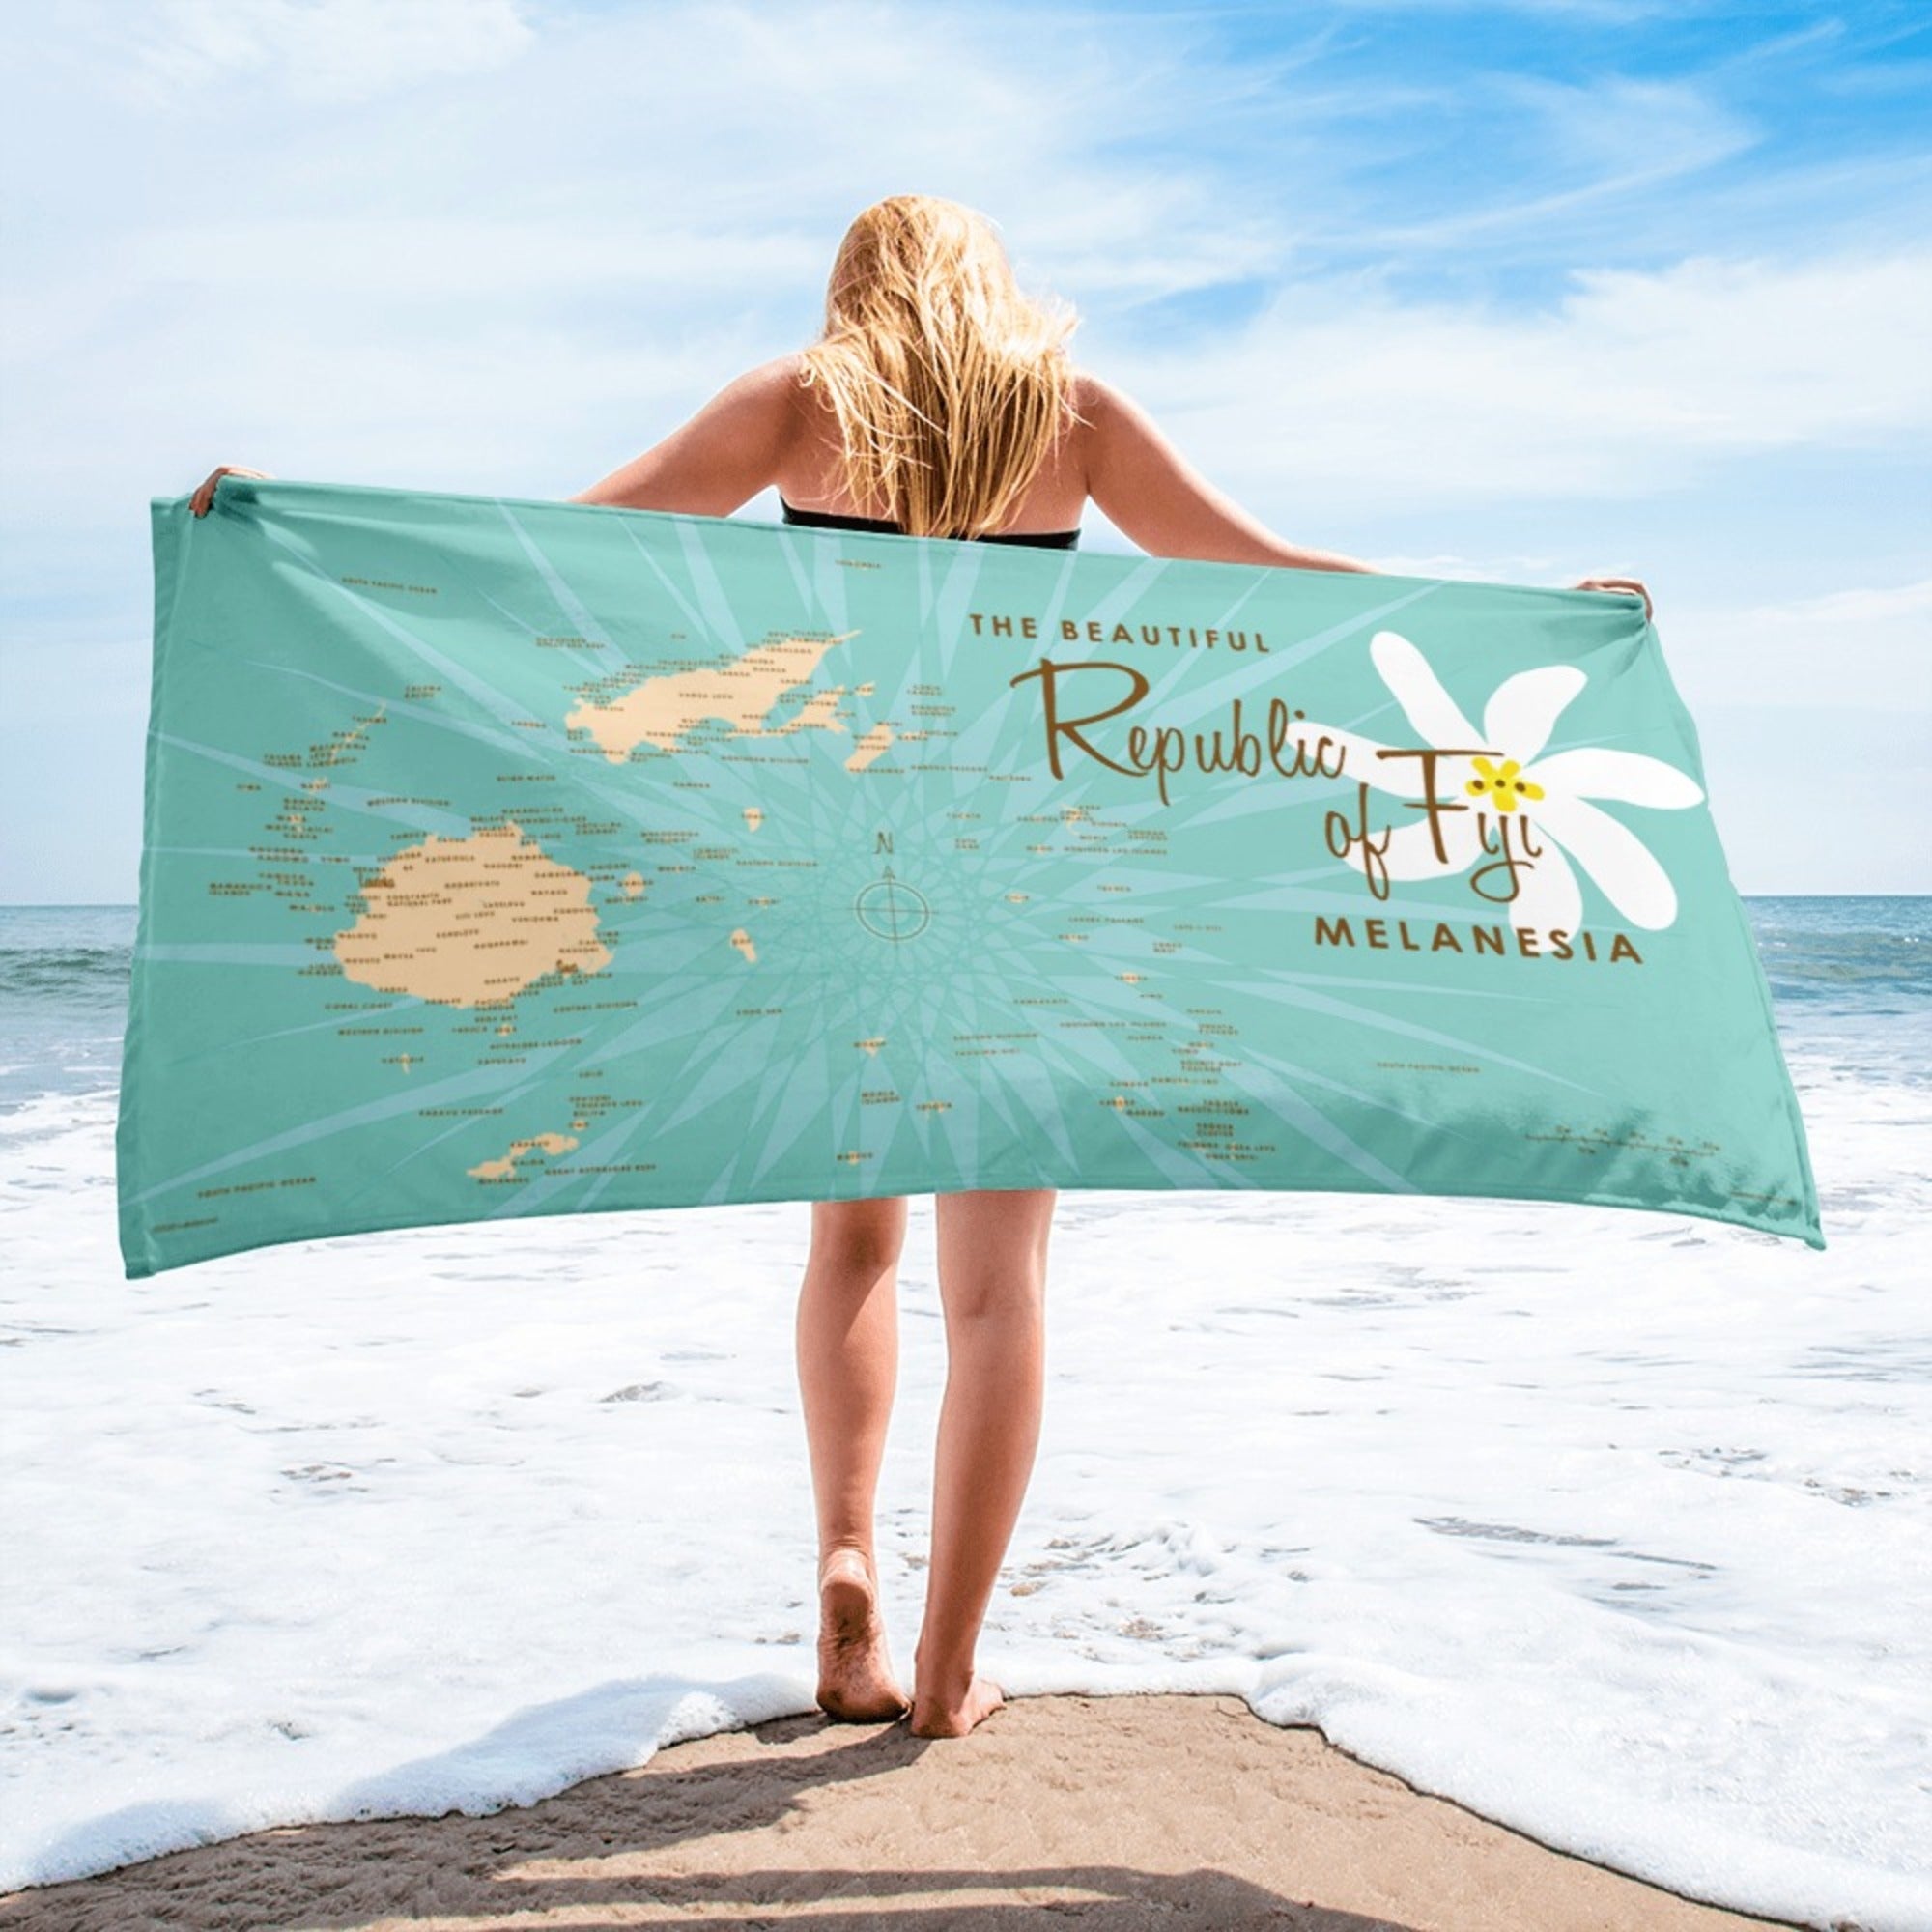 Republic of Fiji Melanesia Beach Towel